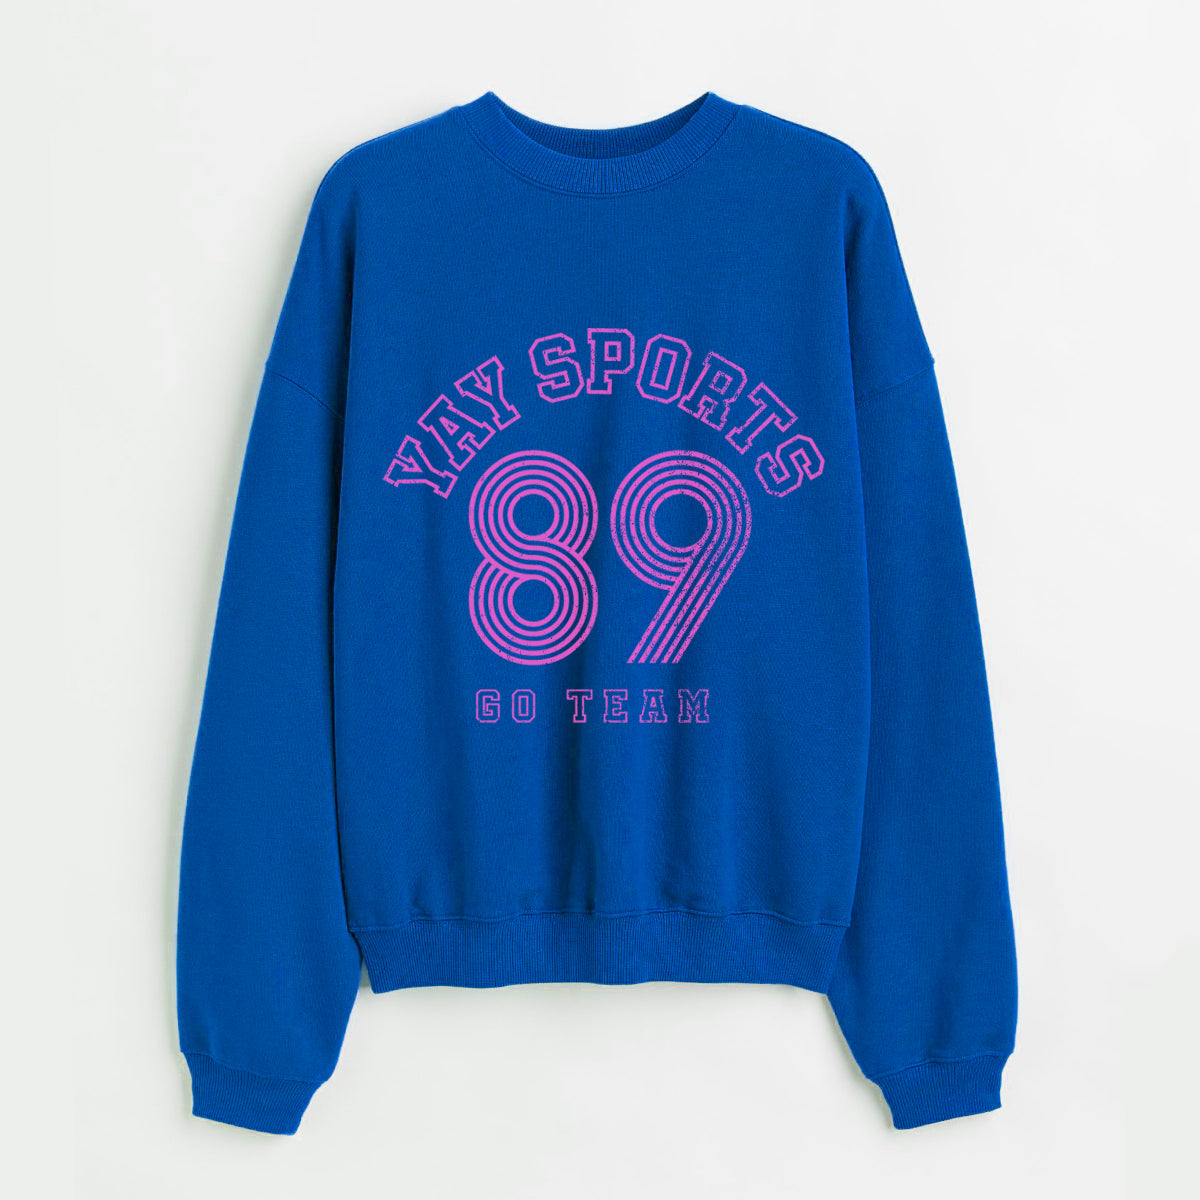 Yay Sports 89 Sweatshirt